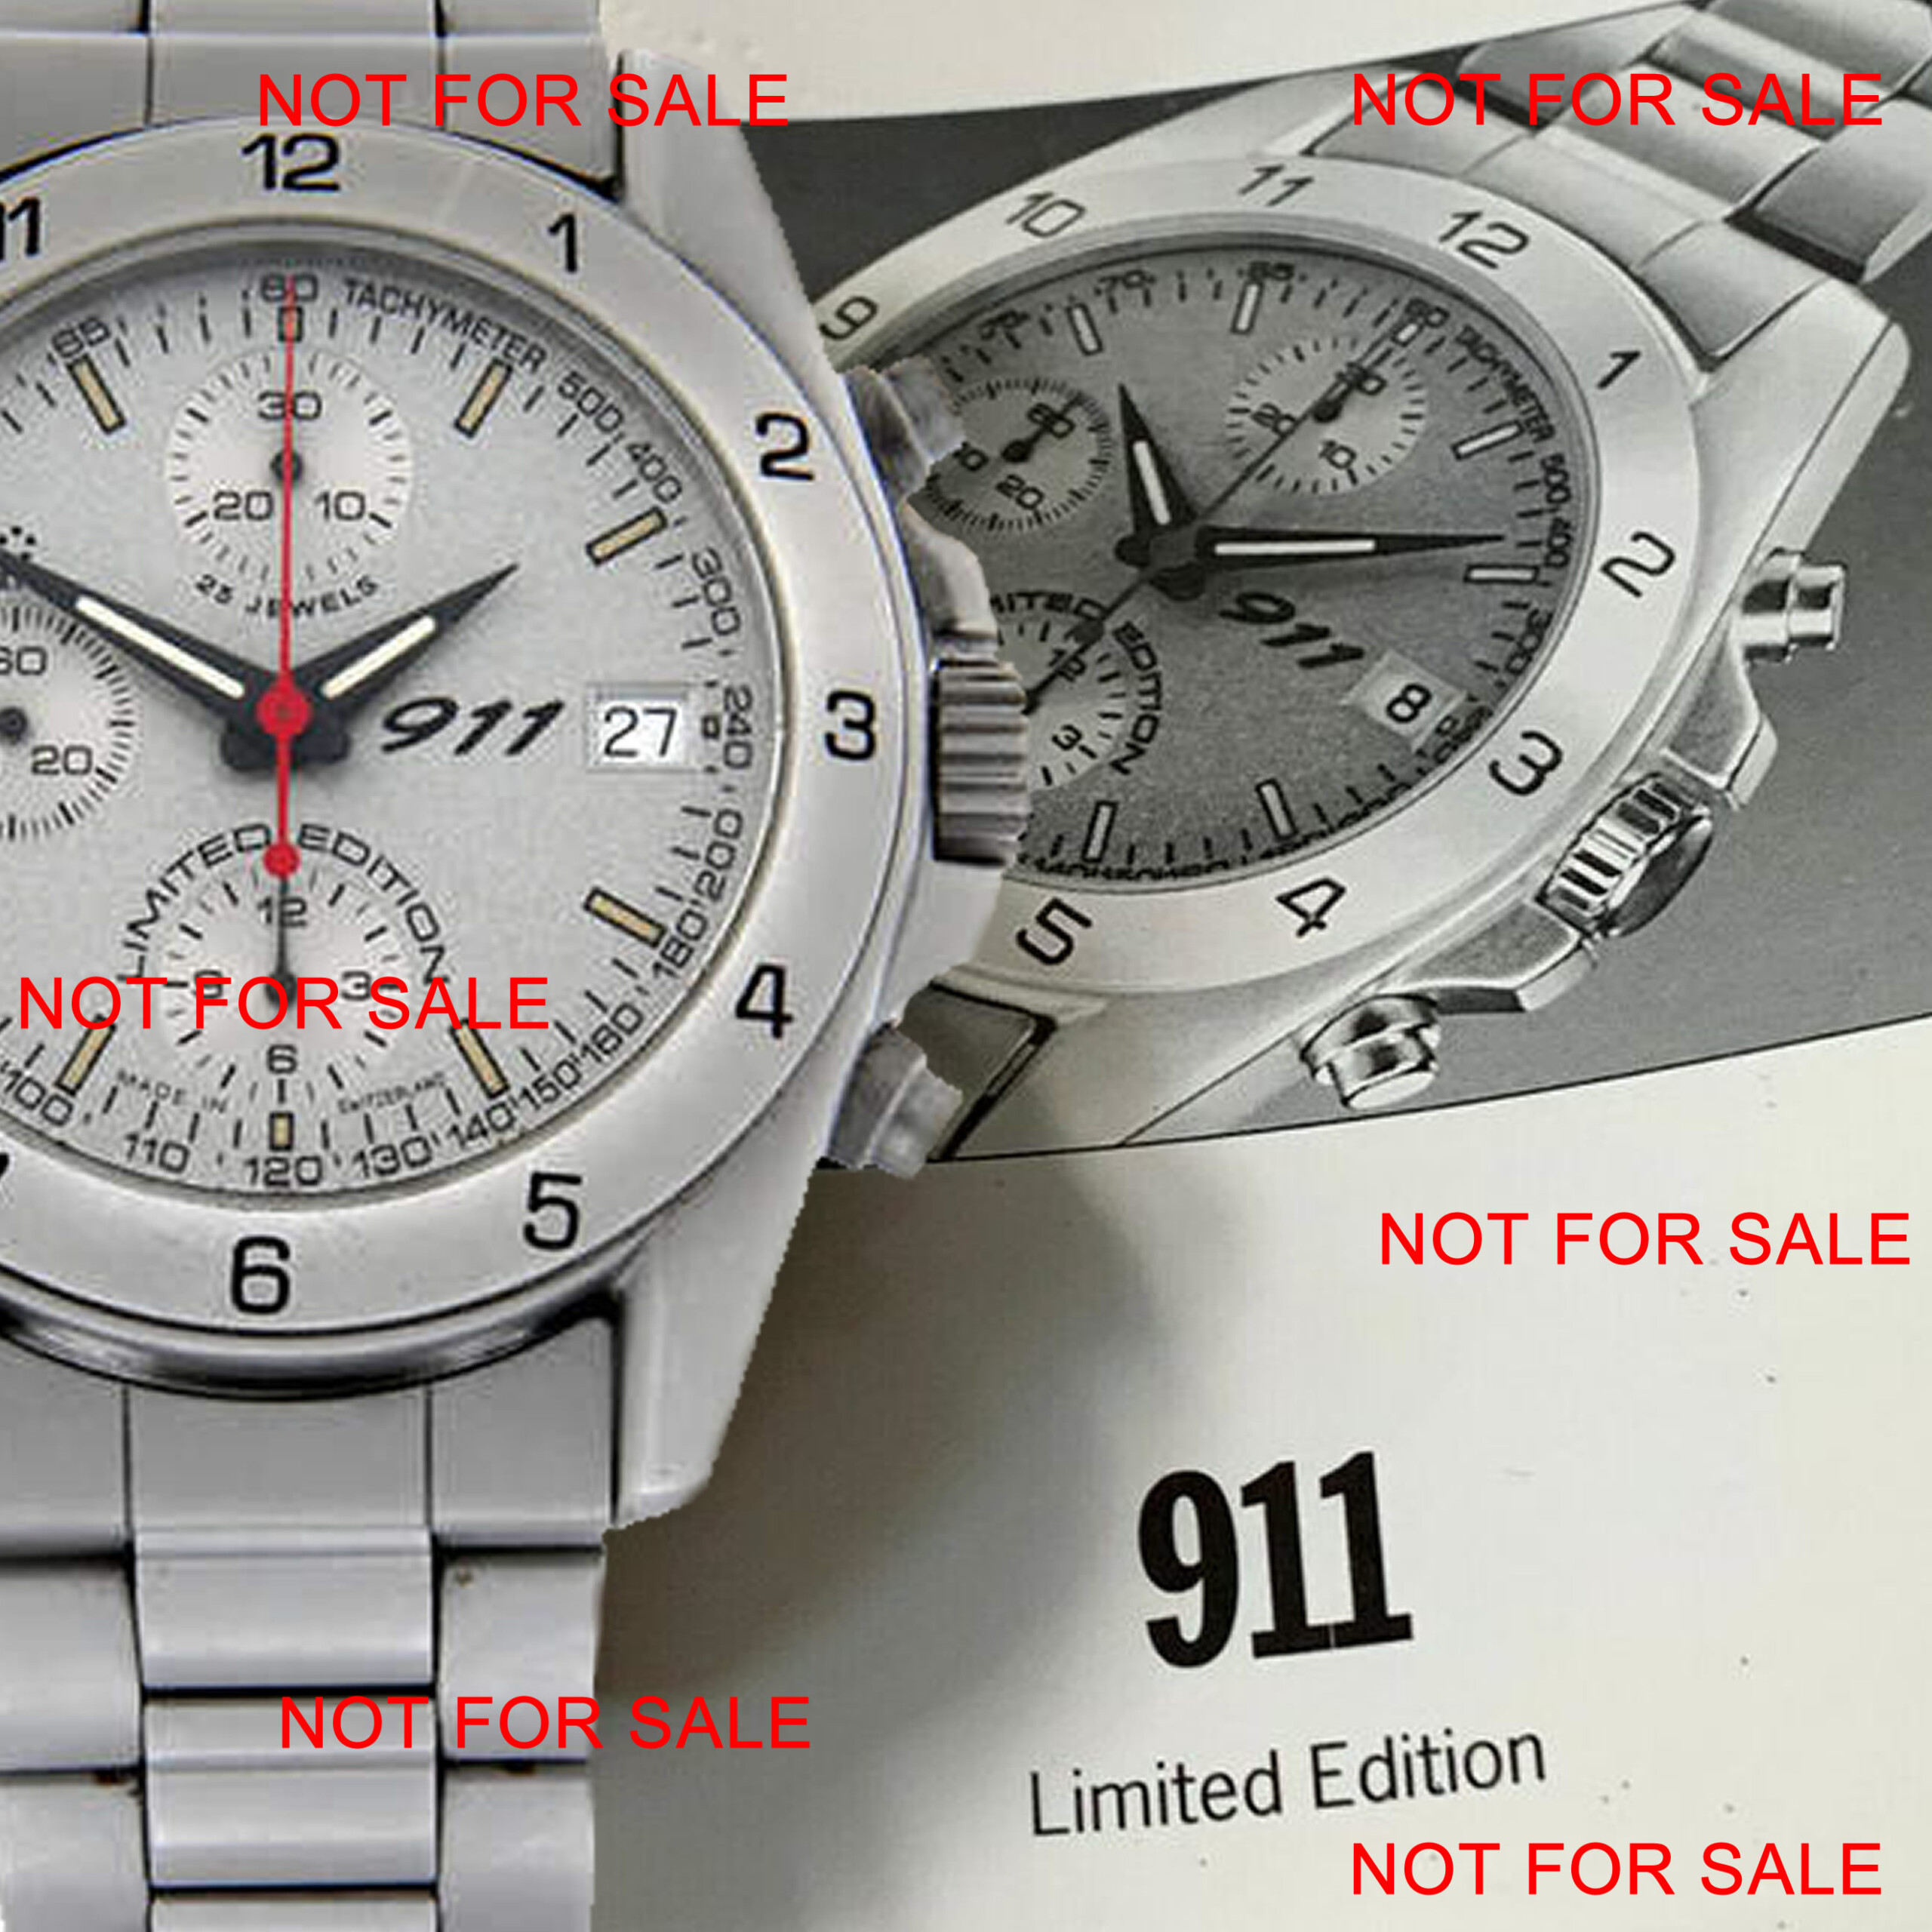 swiss made original watch case for eterna porsche 911 valjoux 7750